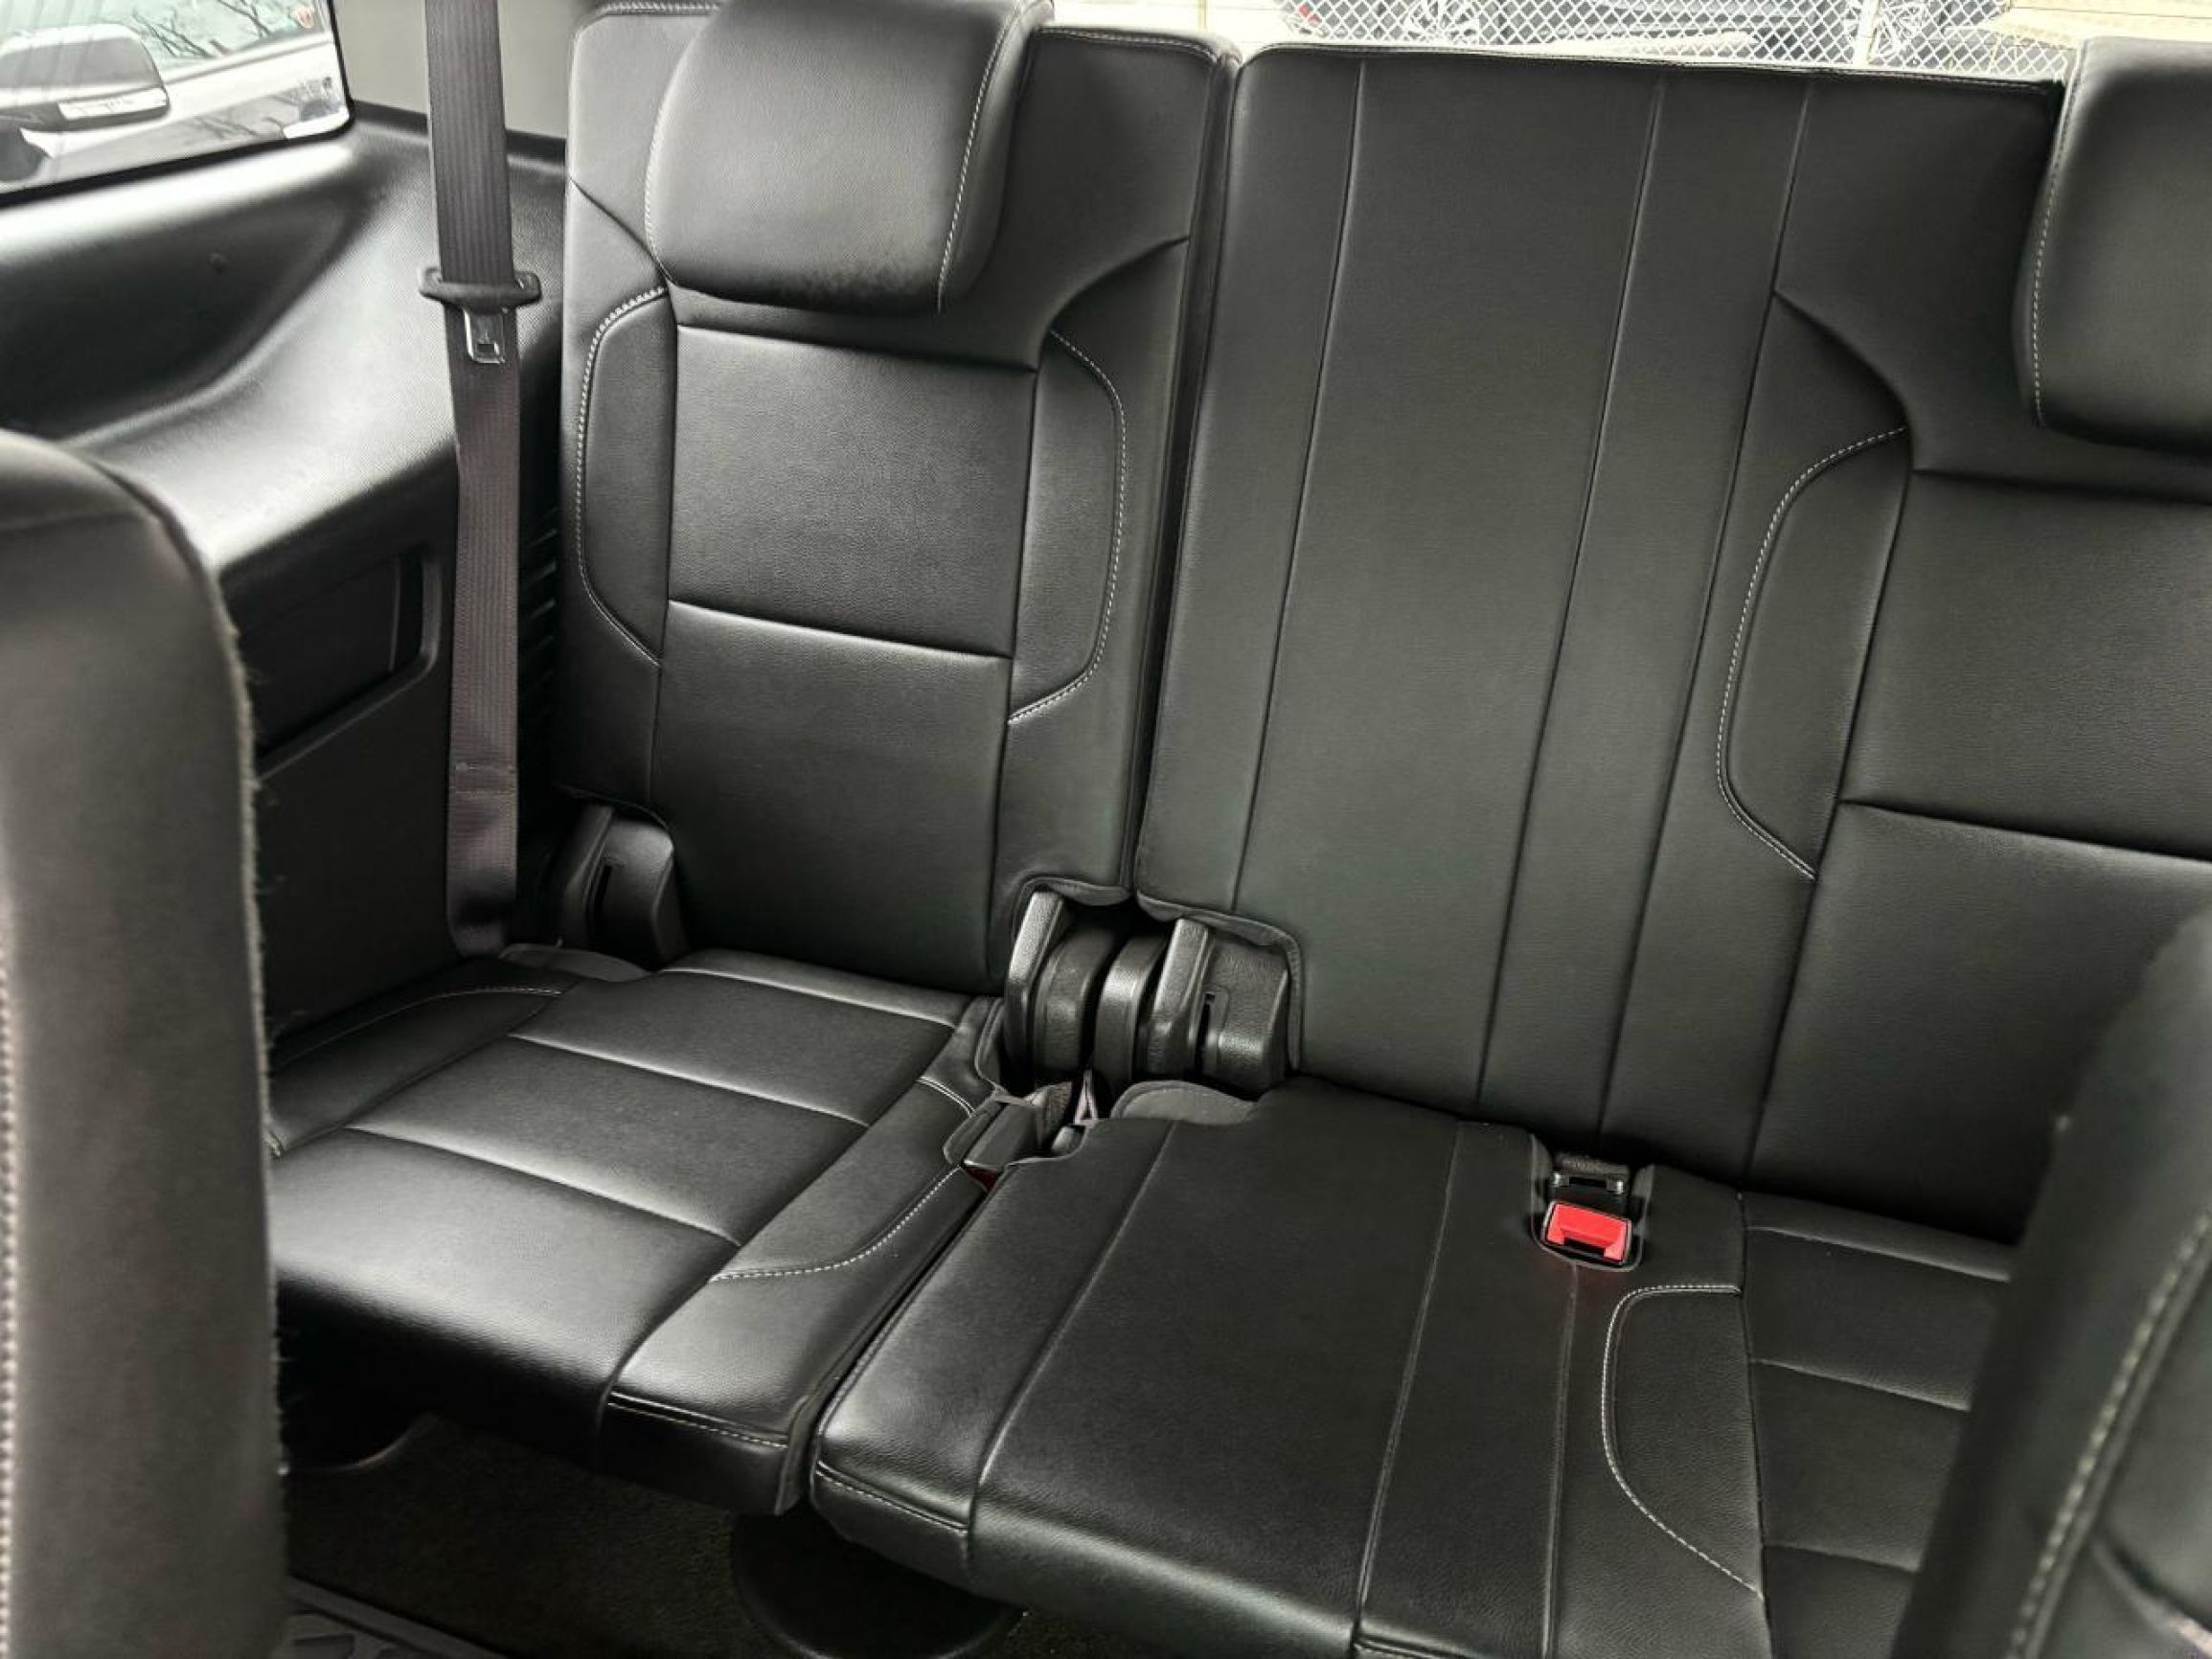 2017 Chevrolet Tahoe LT, Z71, Leather, Sunroof, DVD Player, Navigation